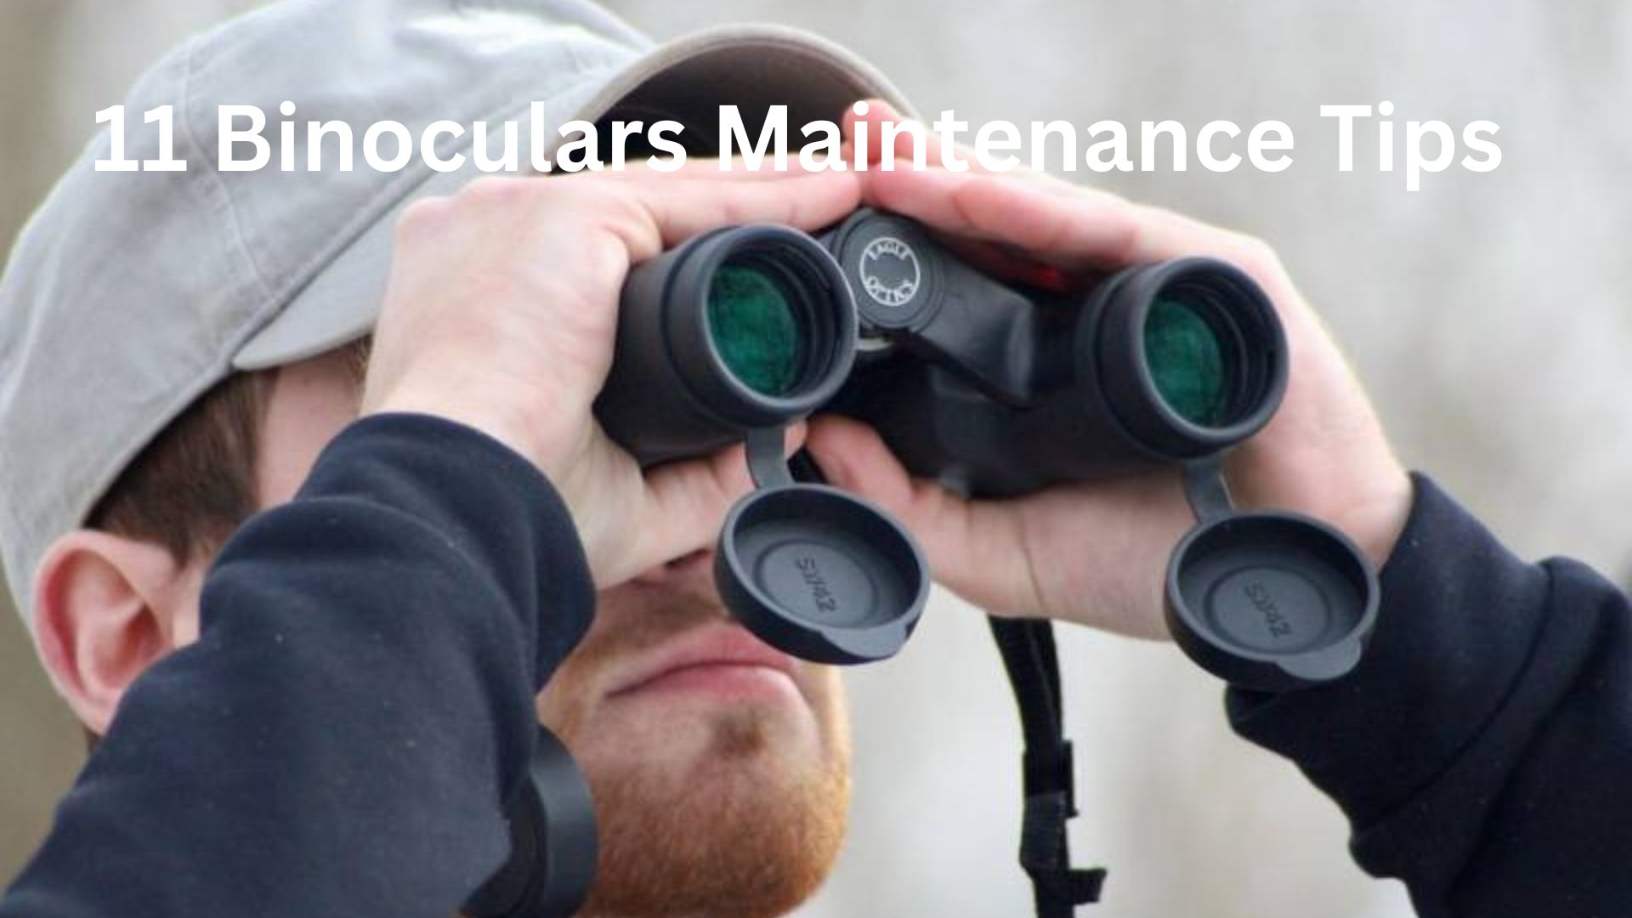 binoculars maintenance tips